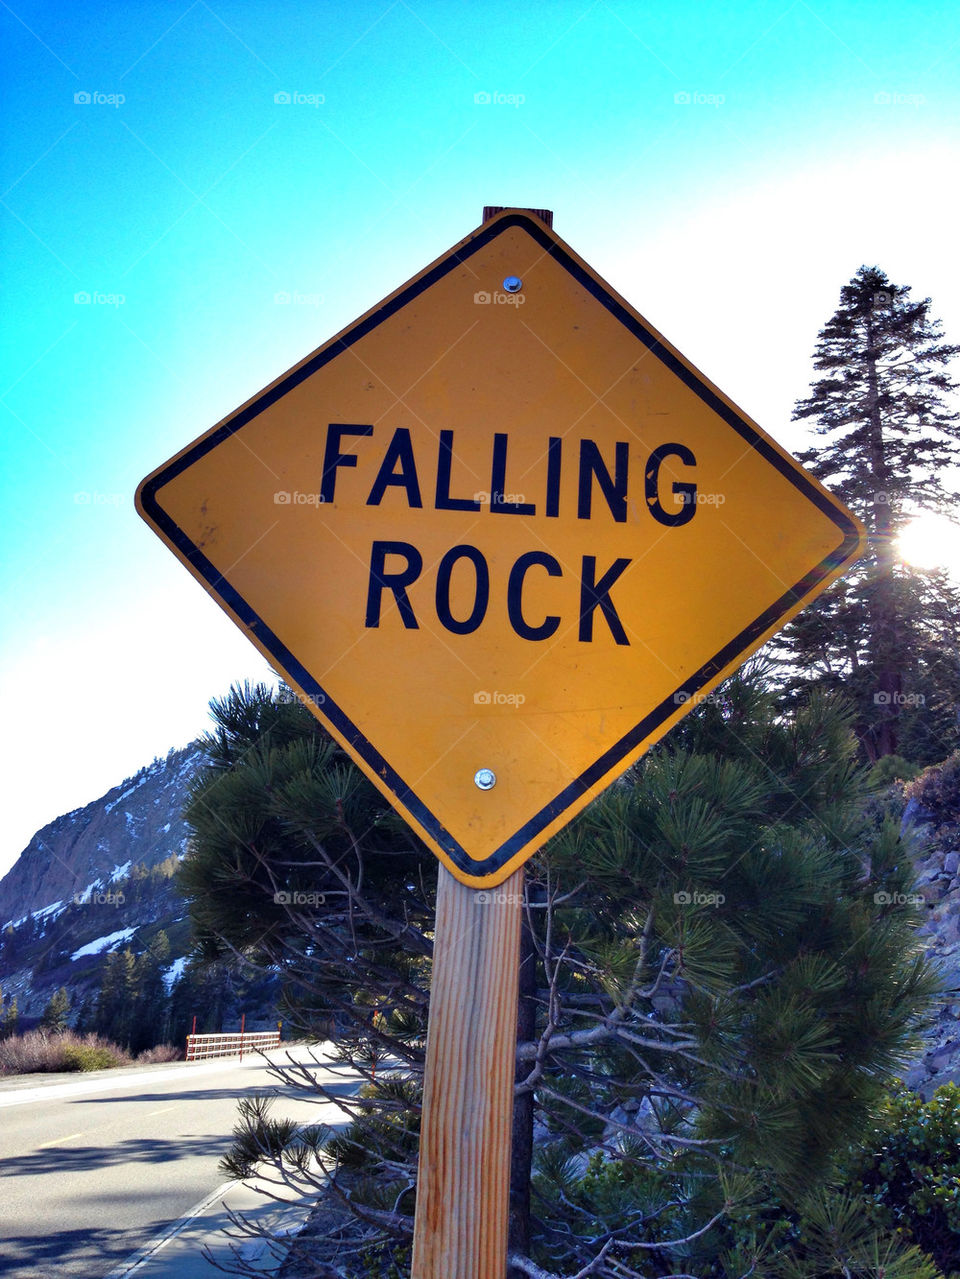 FALLING ROCK SIGN